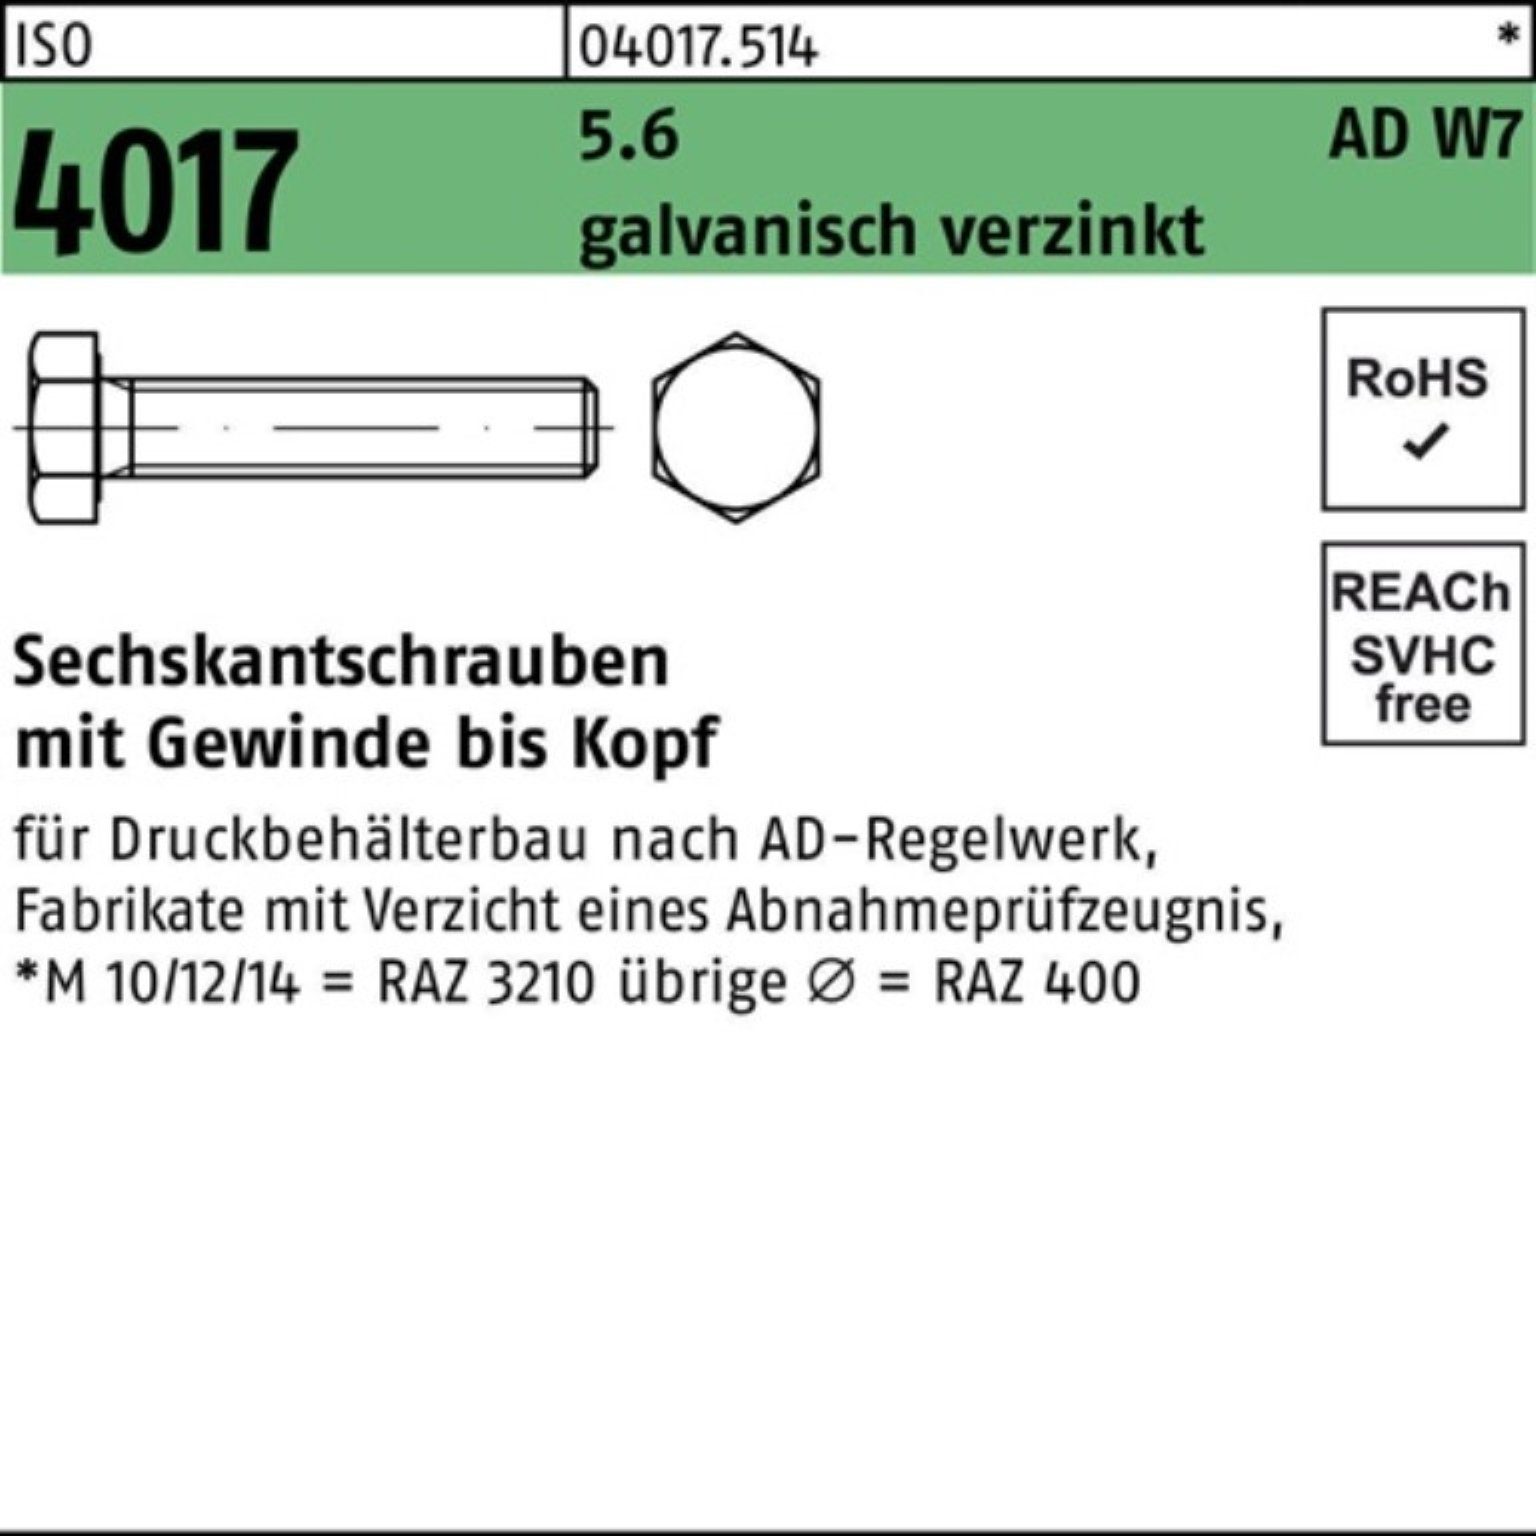 Bufab Sechskantschraube 100er 4017 ISO AD W7 galv.verz. 5.6 Sechskantschraube Pack 150 VG M24x